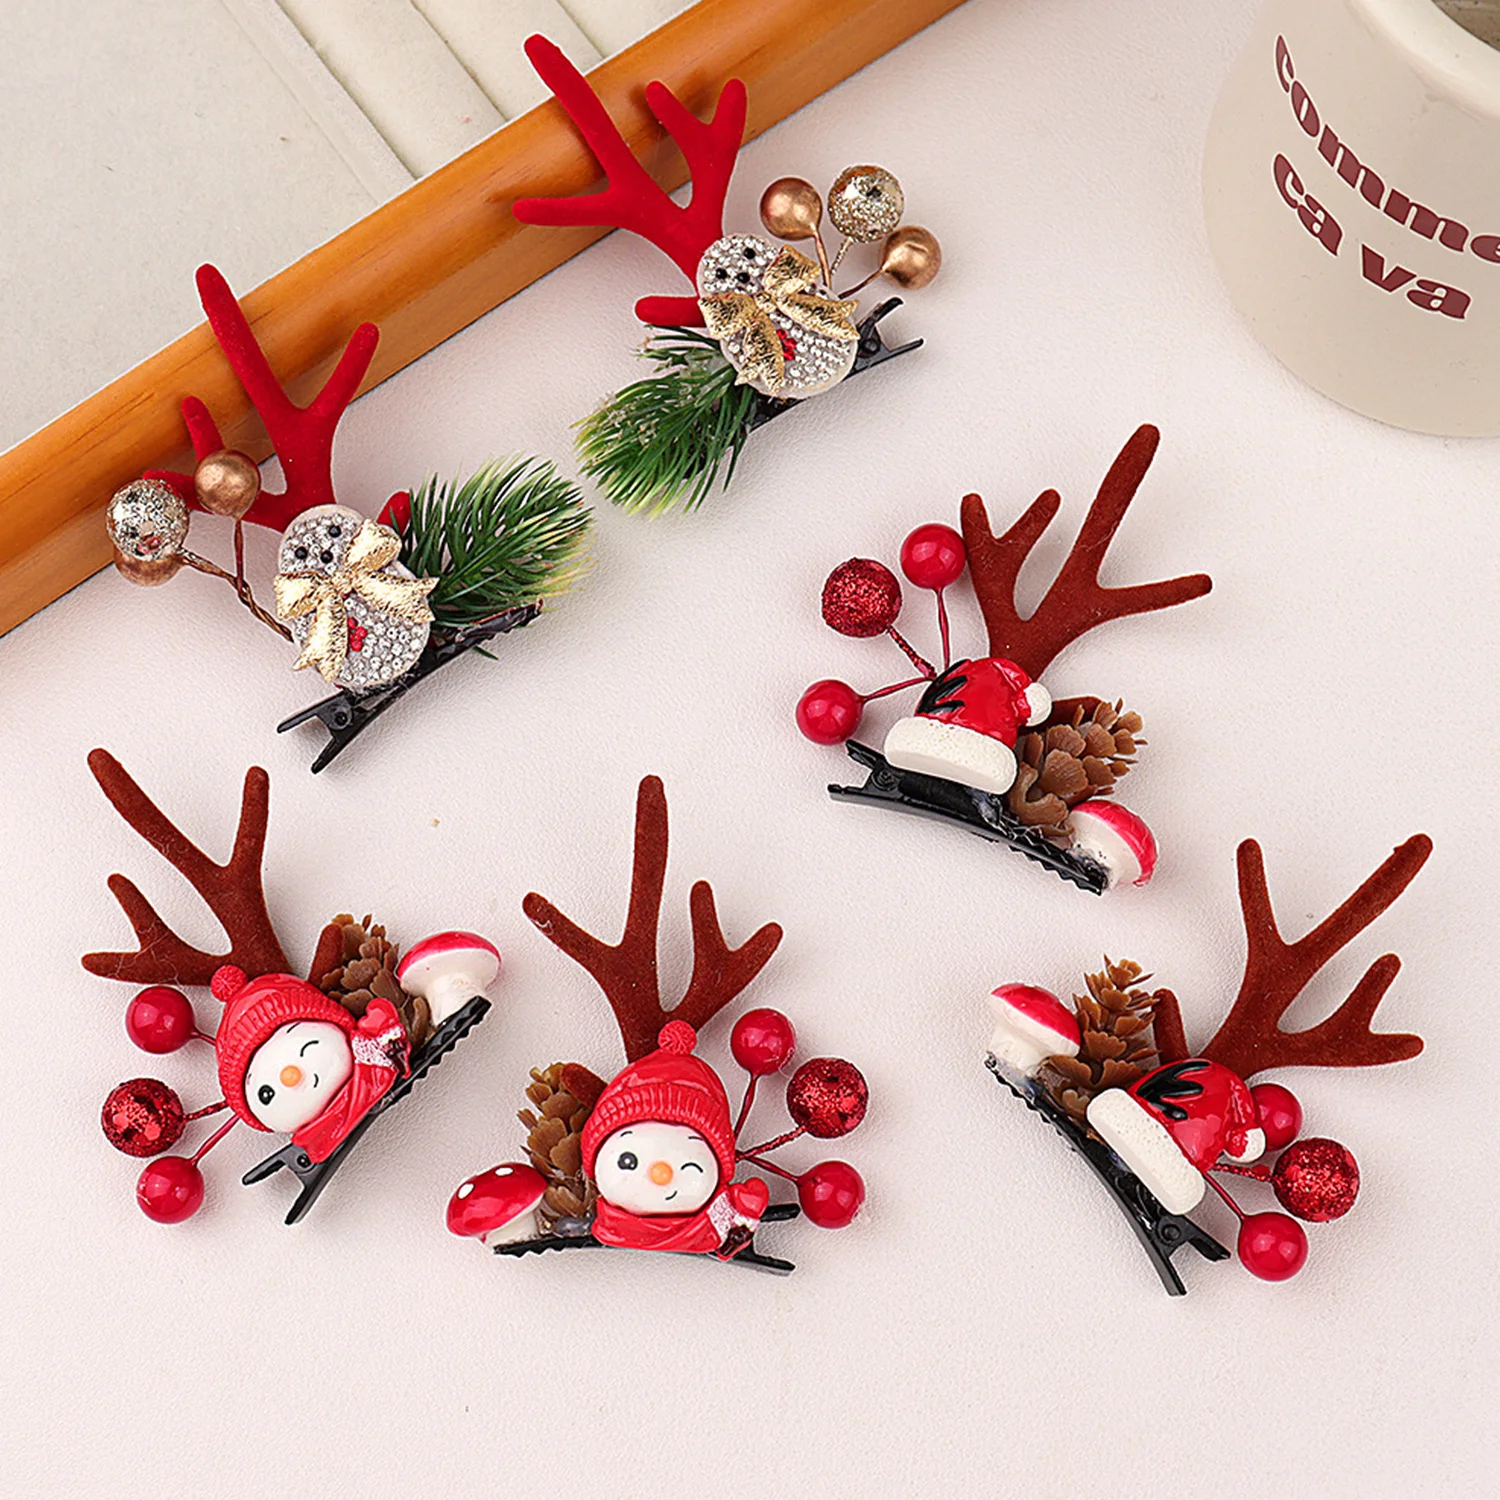 

2pcs/Set Kawaii Christmas Elk Ear Hair Clip Women Girl Santa Snowman Hairpin Xmas Party Barrettes For Kids Cosplay Headwear